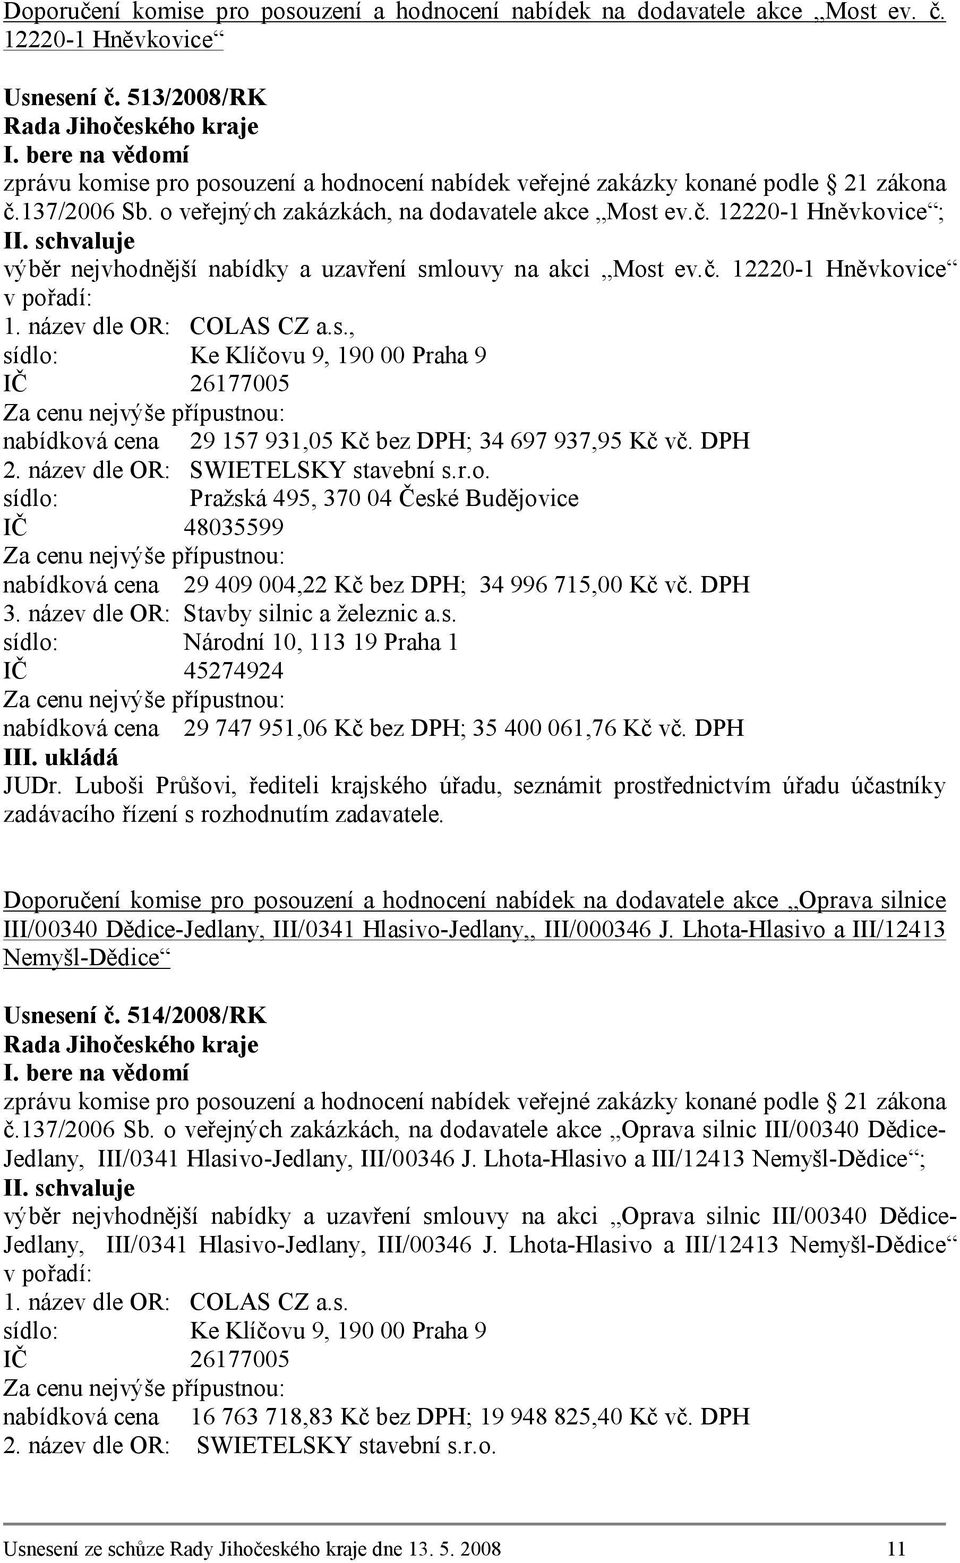 č. 12220-1 Hněvkovice v pořadí: 1. název dle OR: COLAS CZ a.s.